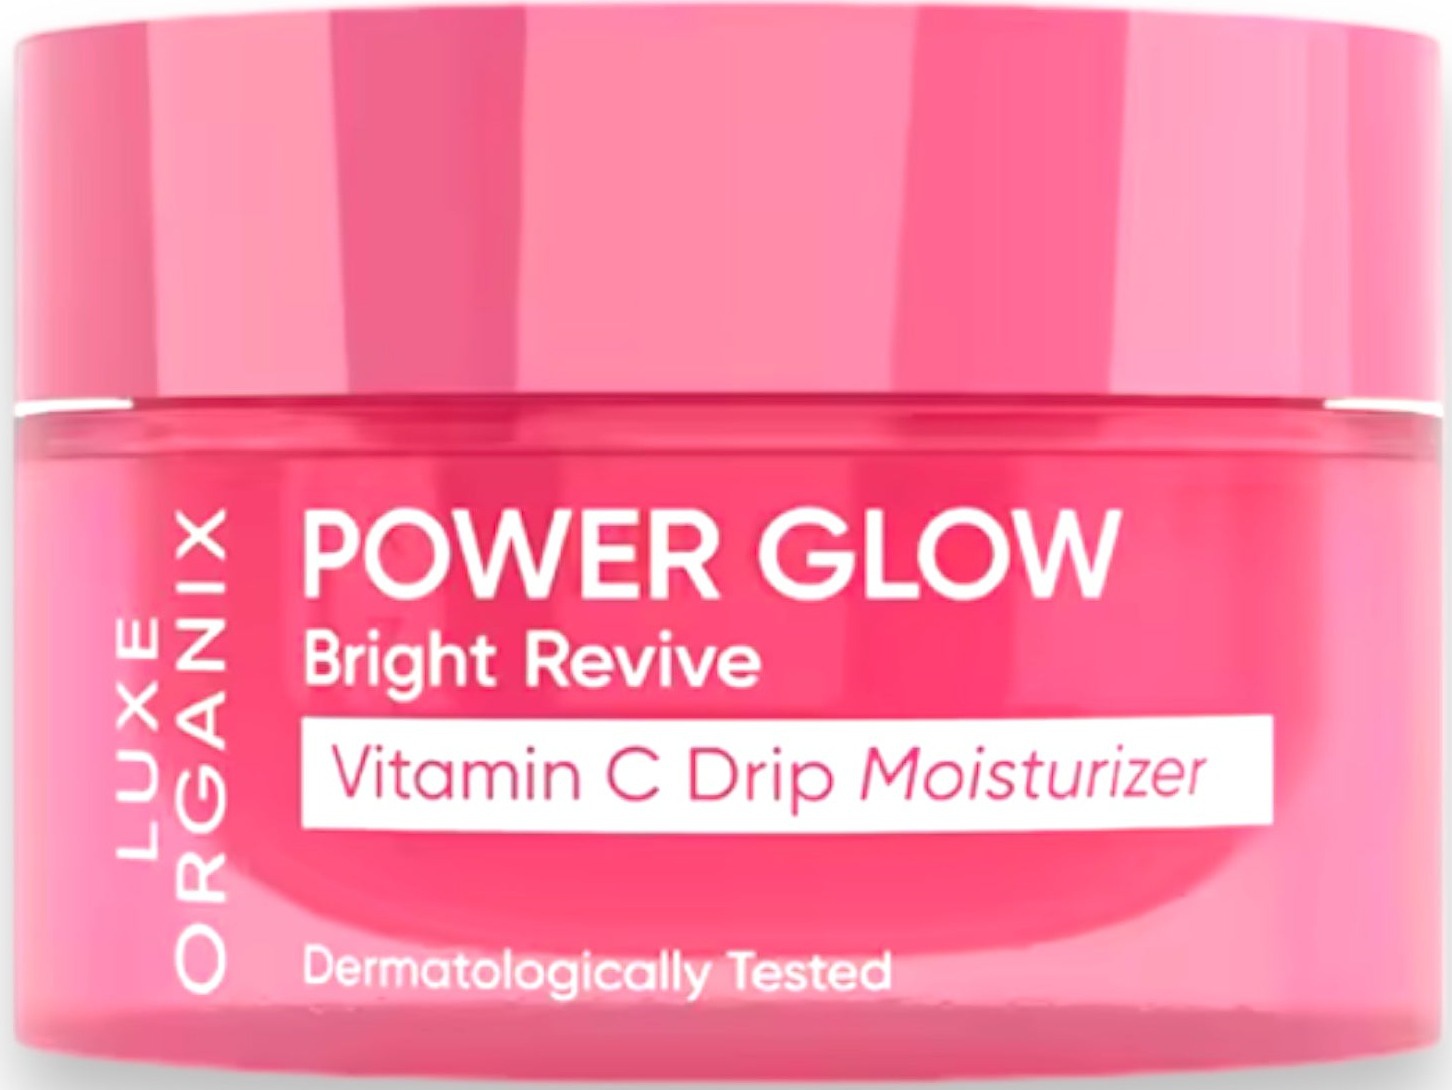 Luxe Organix Power Glow Bright Revive Vitamin C Drip Moisturizer